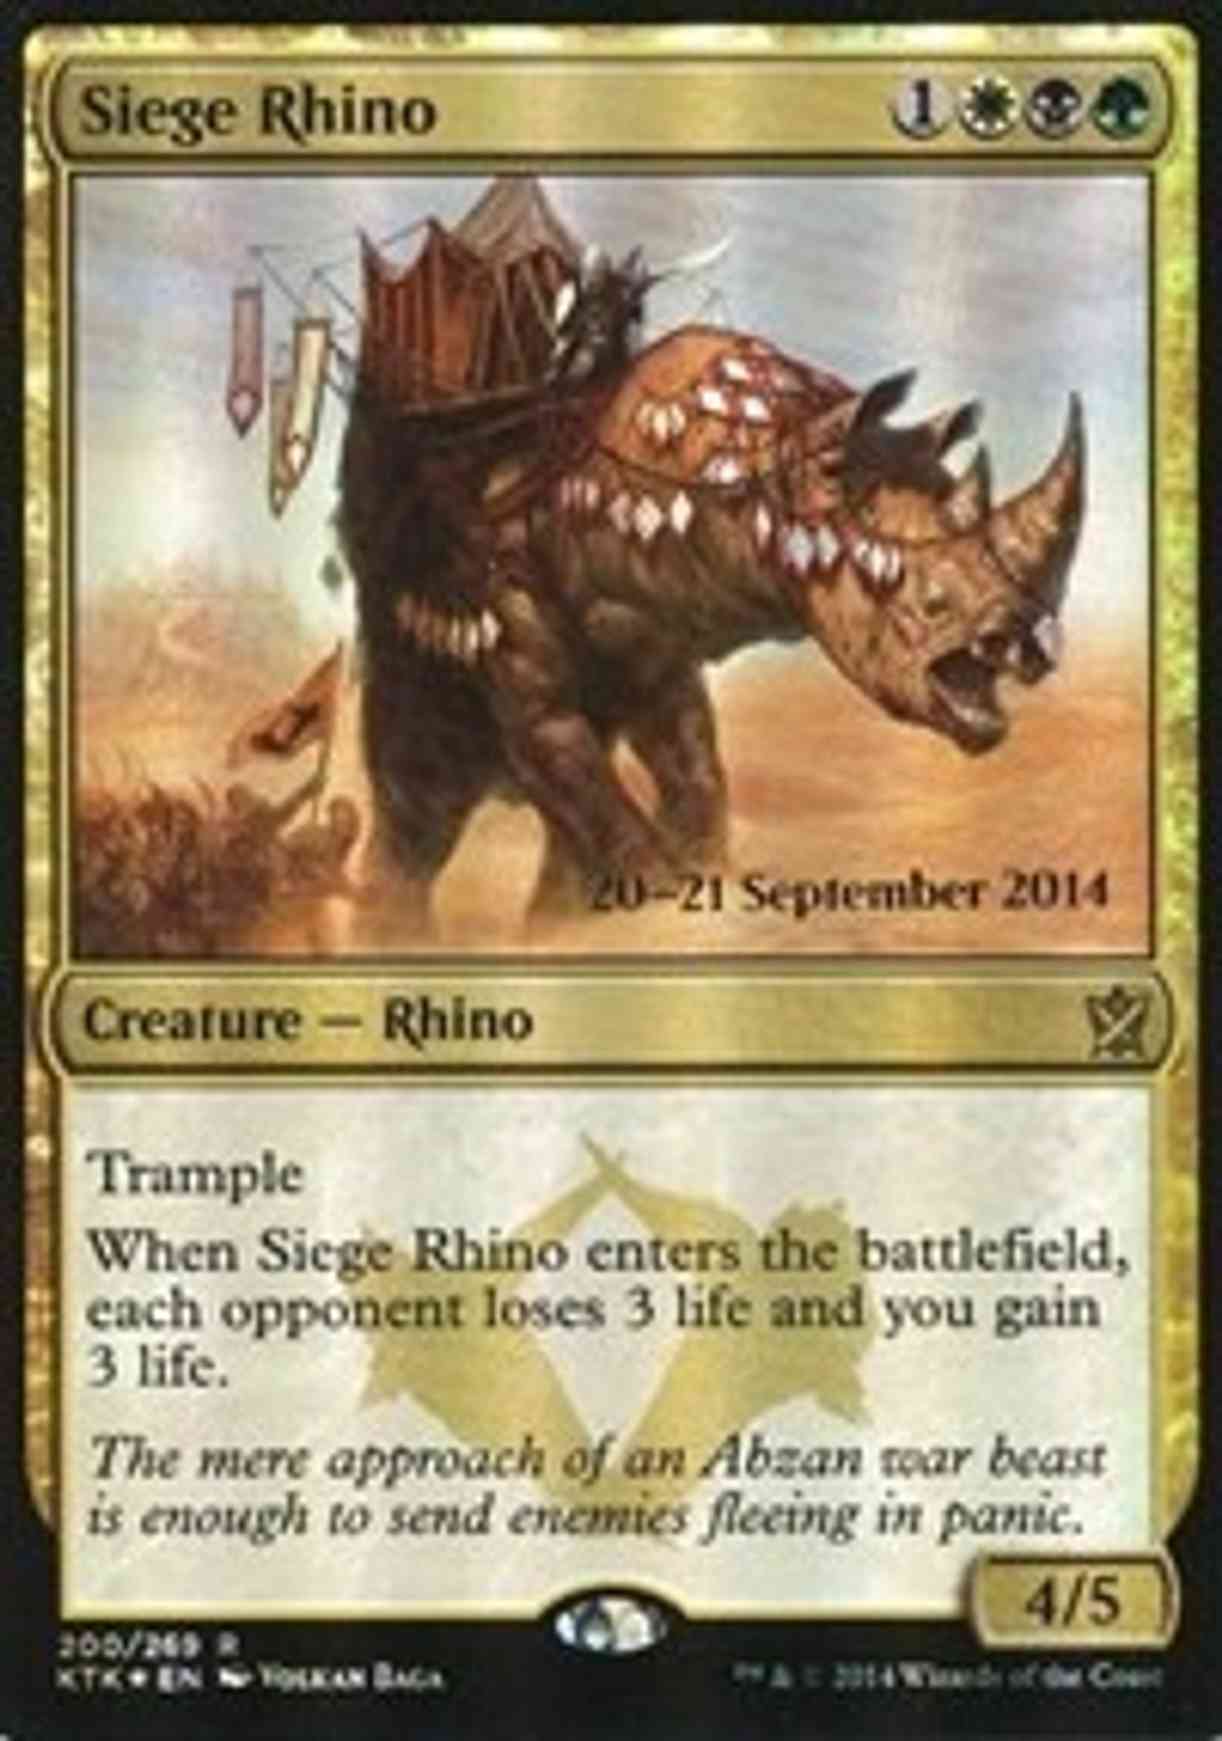 Siege Rhino magic card front